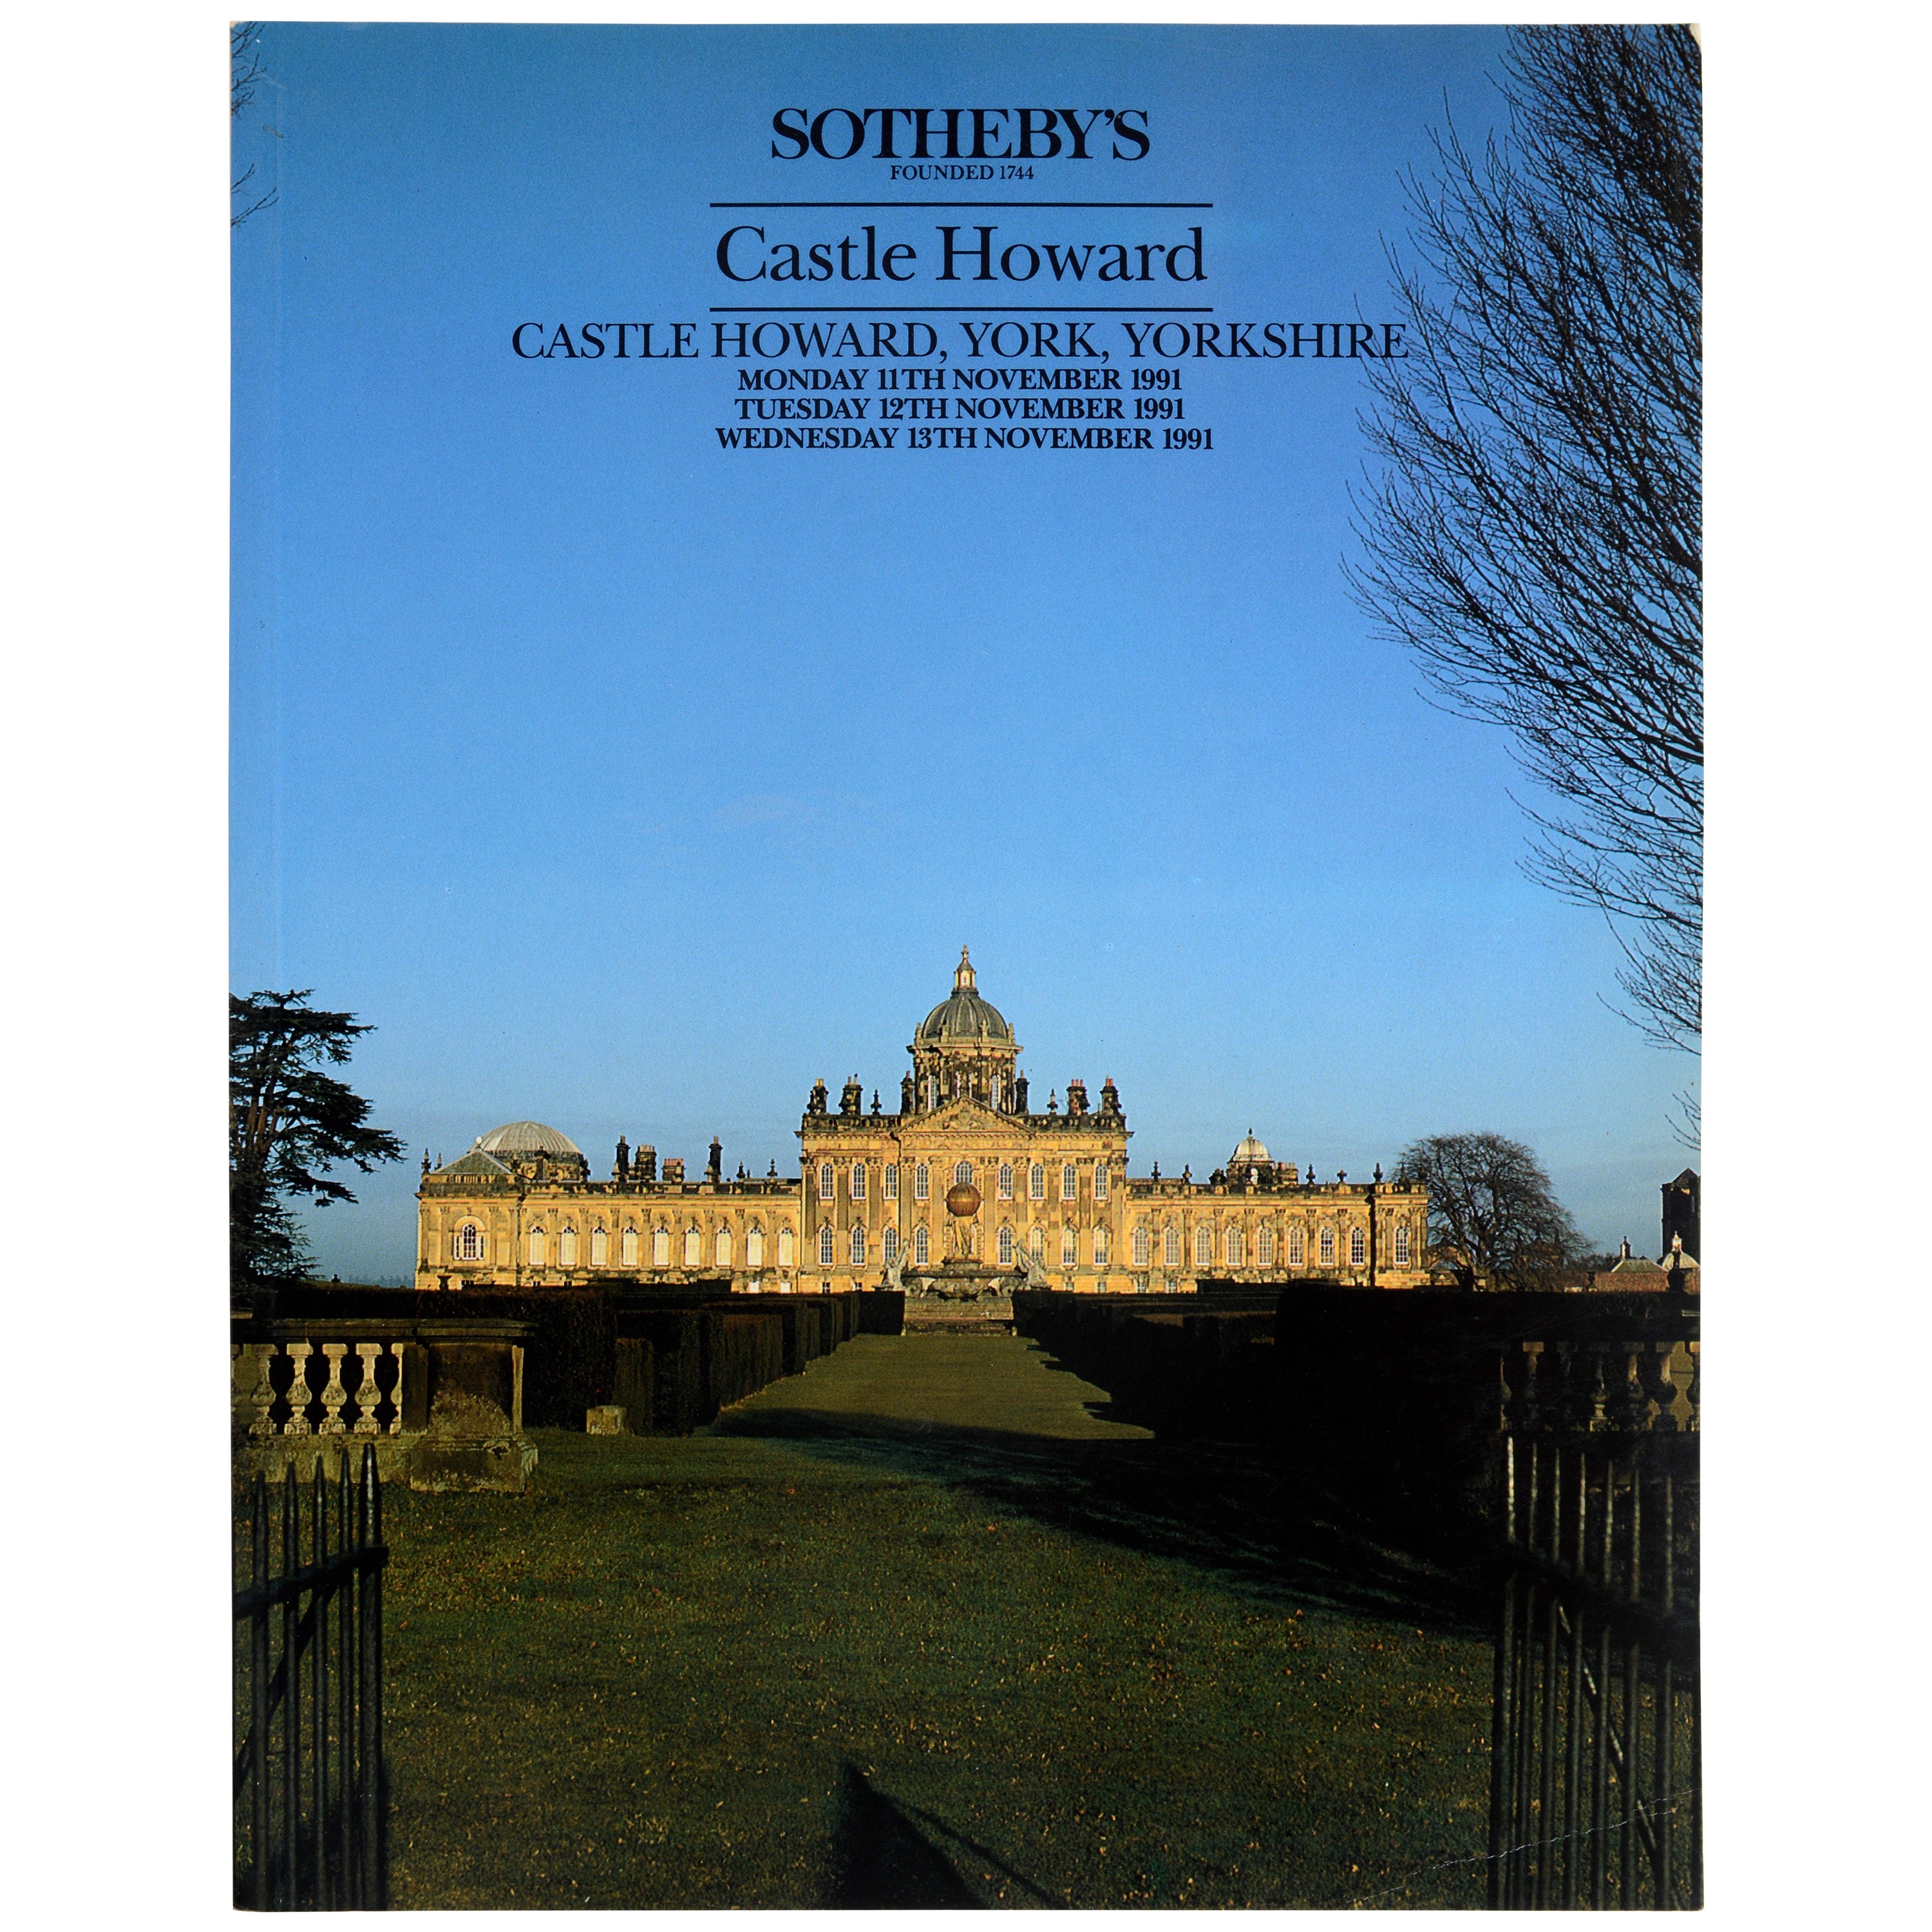 Sotheby's, Castle Howard, York Yorkshire, November 1991, 1st Ed